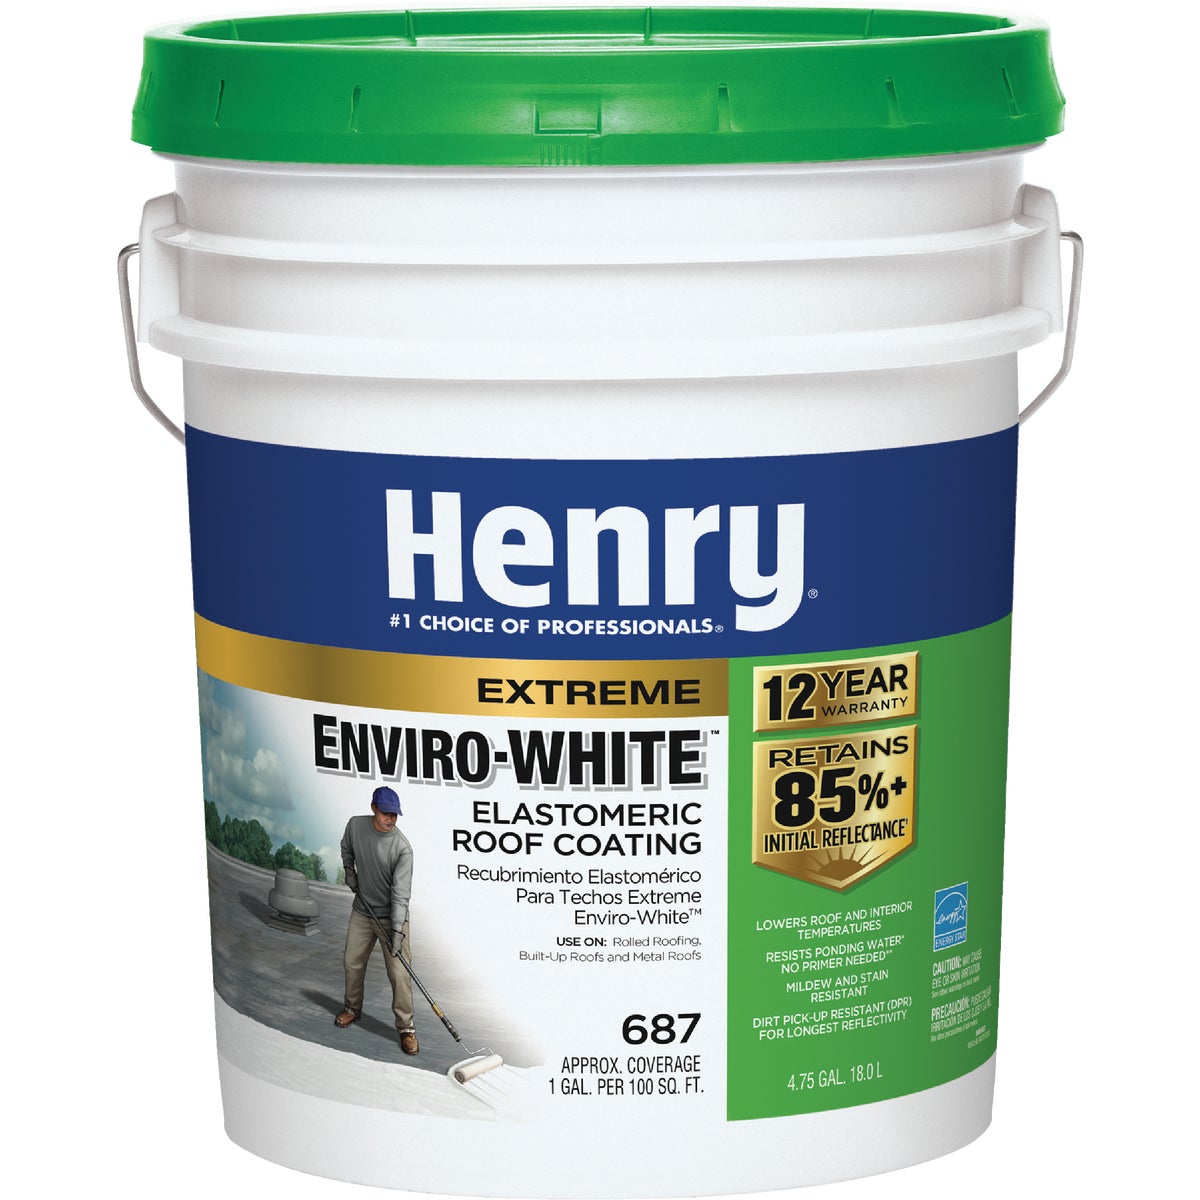 Item 109796, Enviro White Premium White Roof Coating is a premium, high-solids, white 